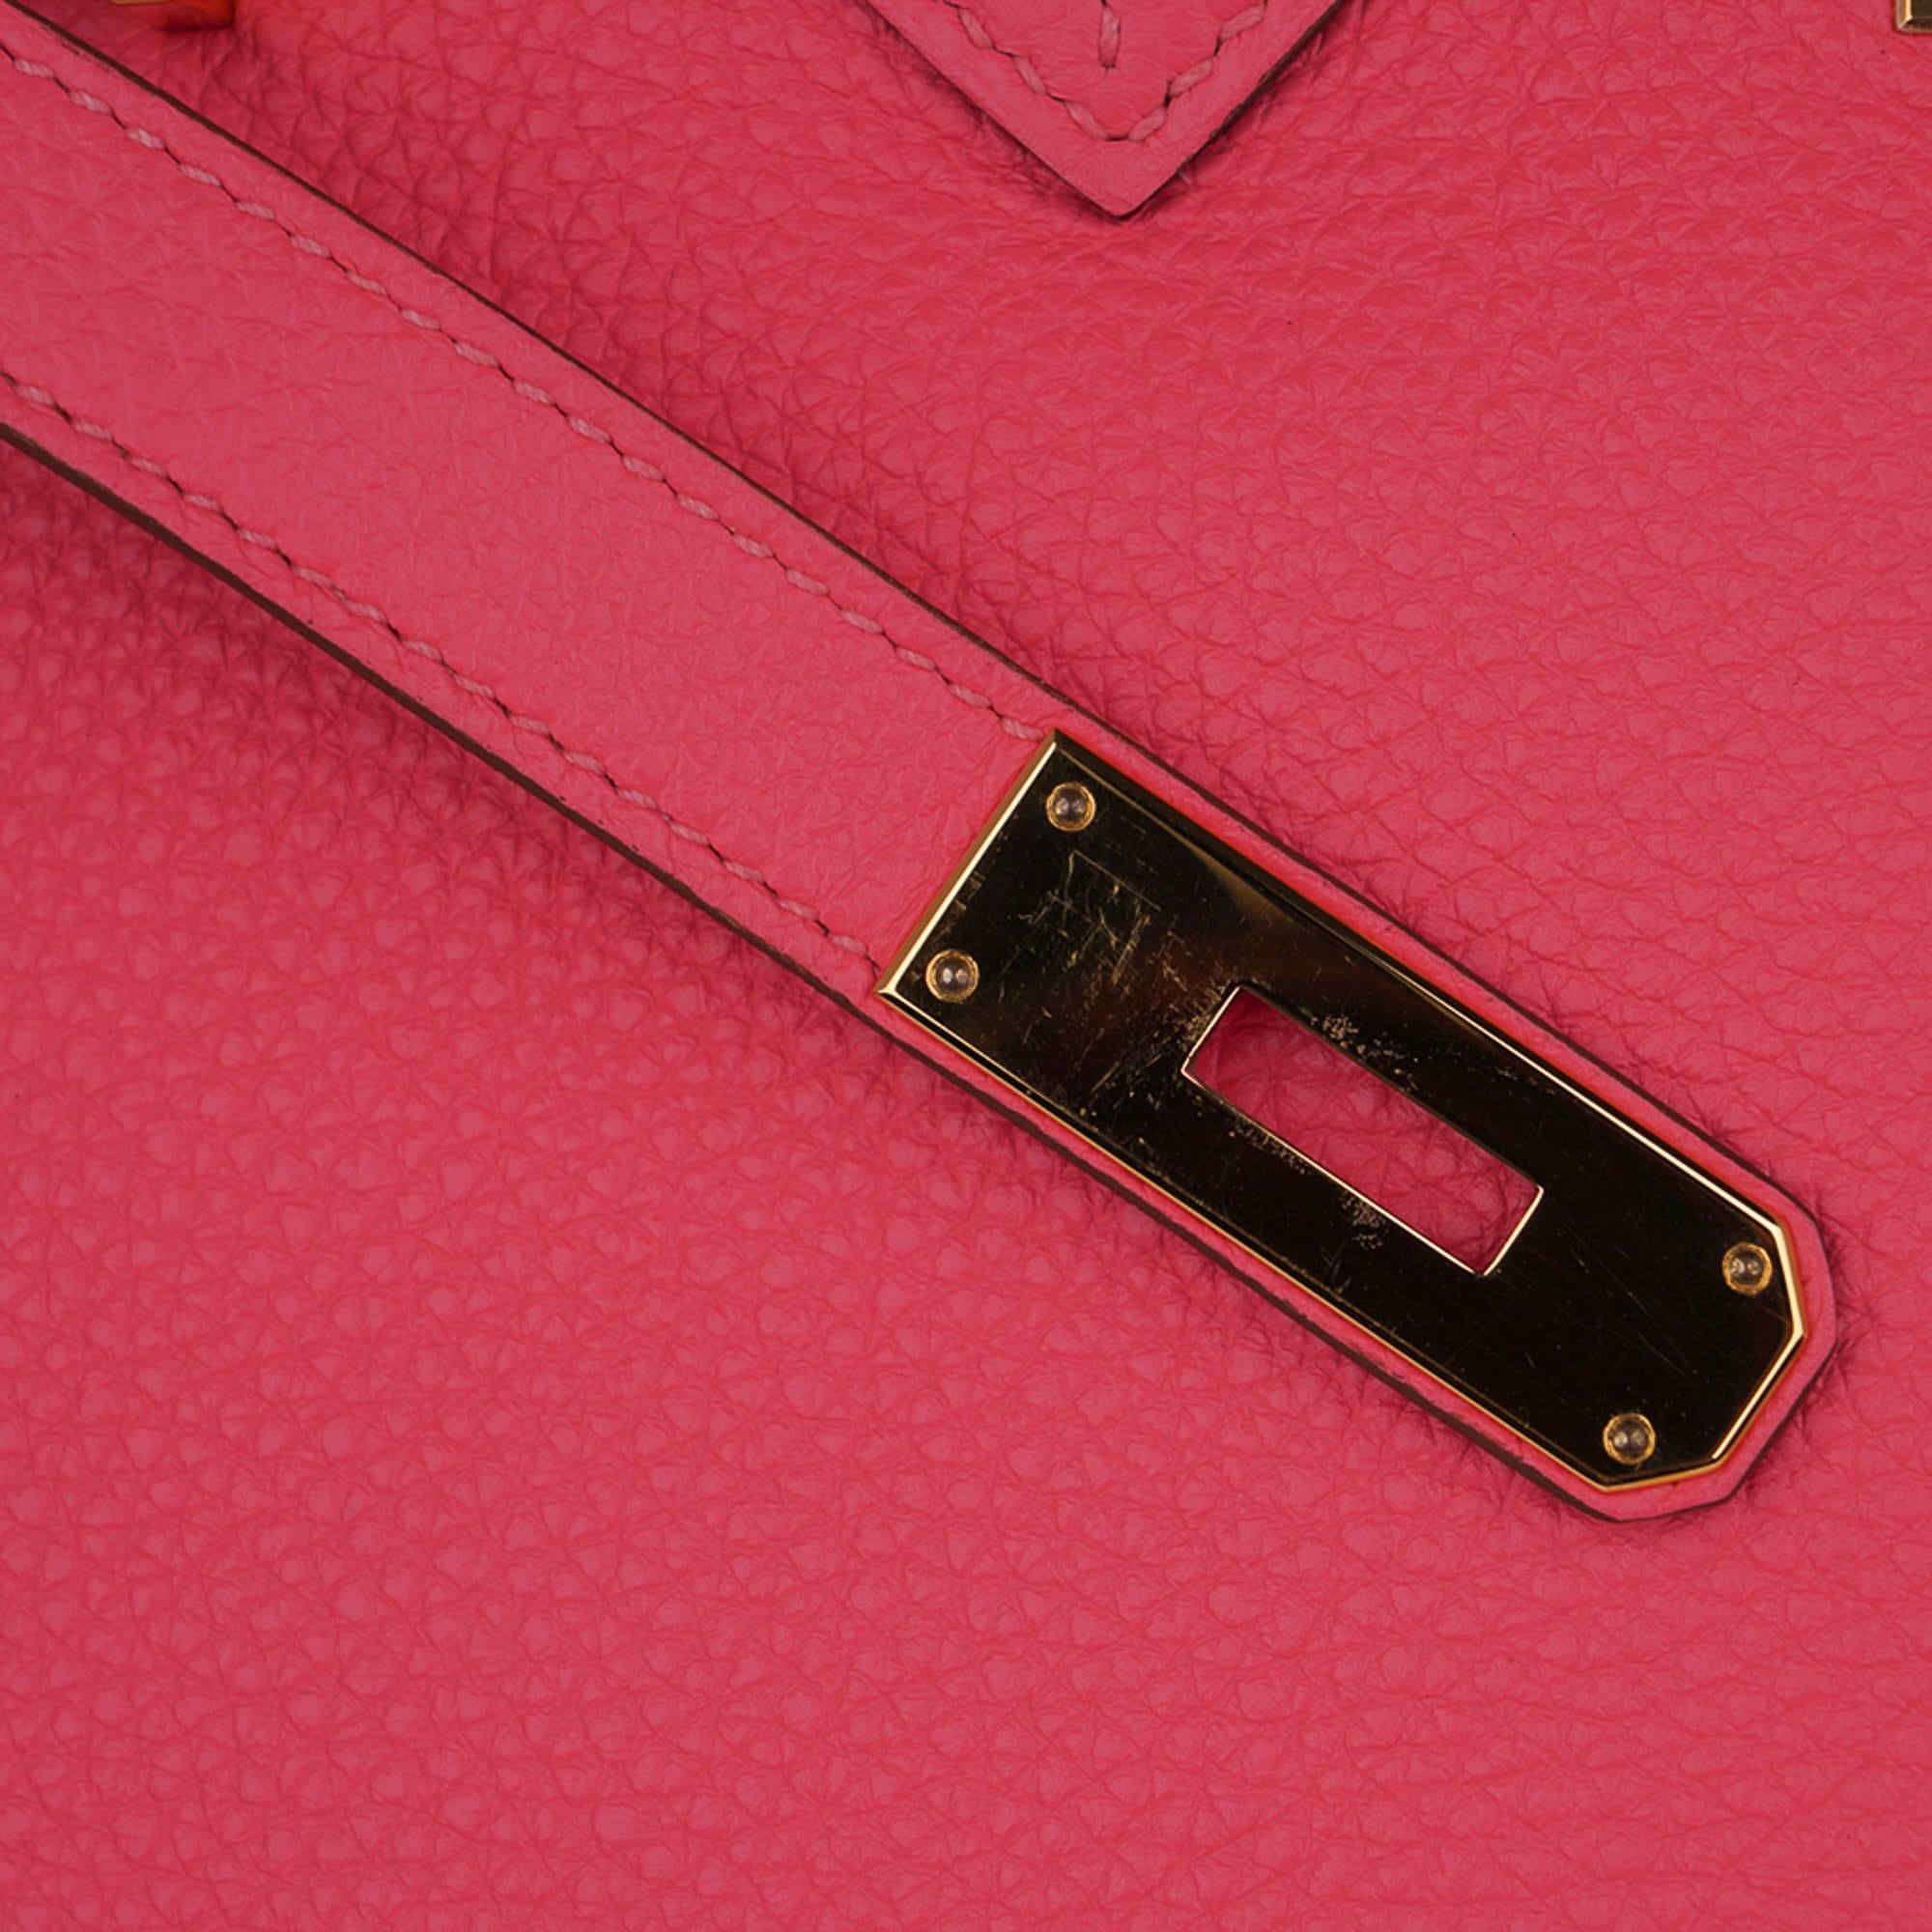 Hermes Birkin 35 Bag Rose Lipstick Pink Togo Gold Hardware – Mightychic